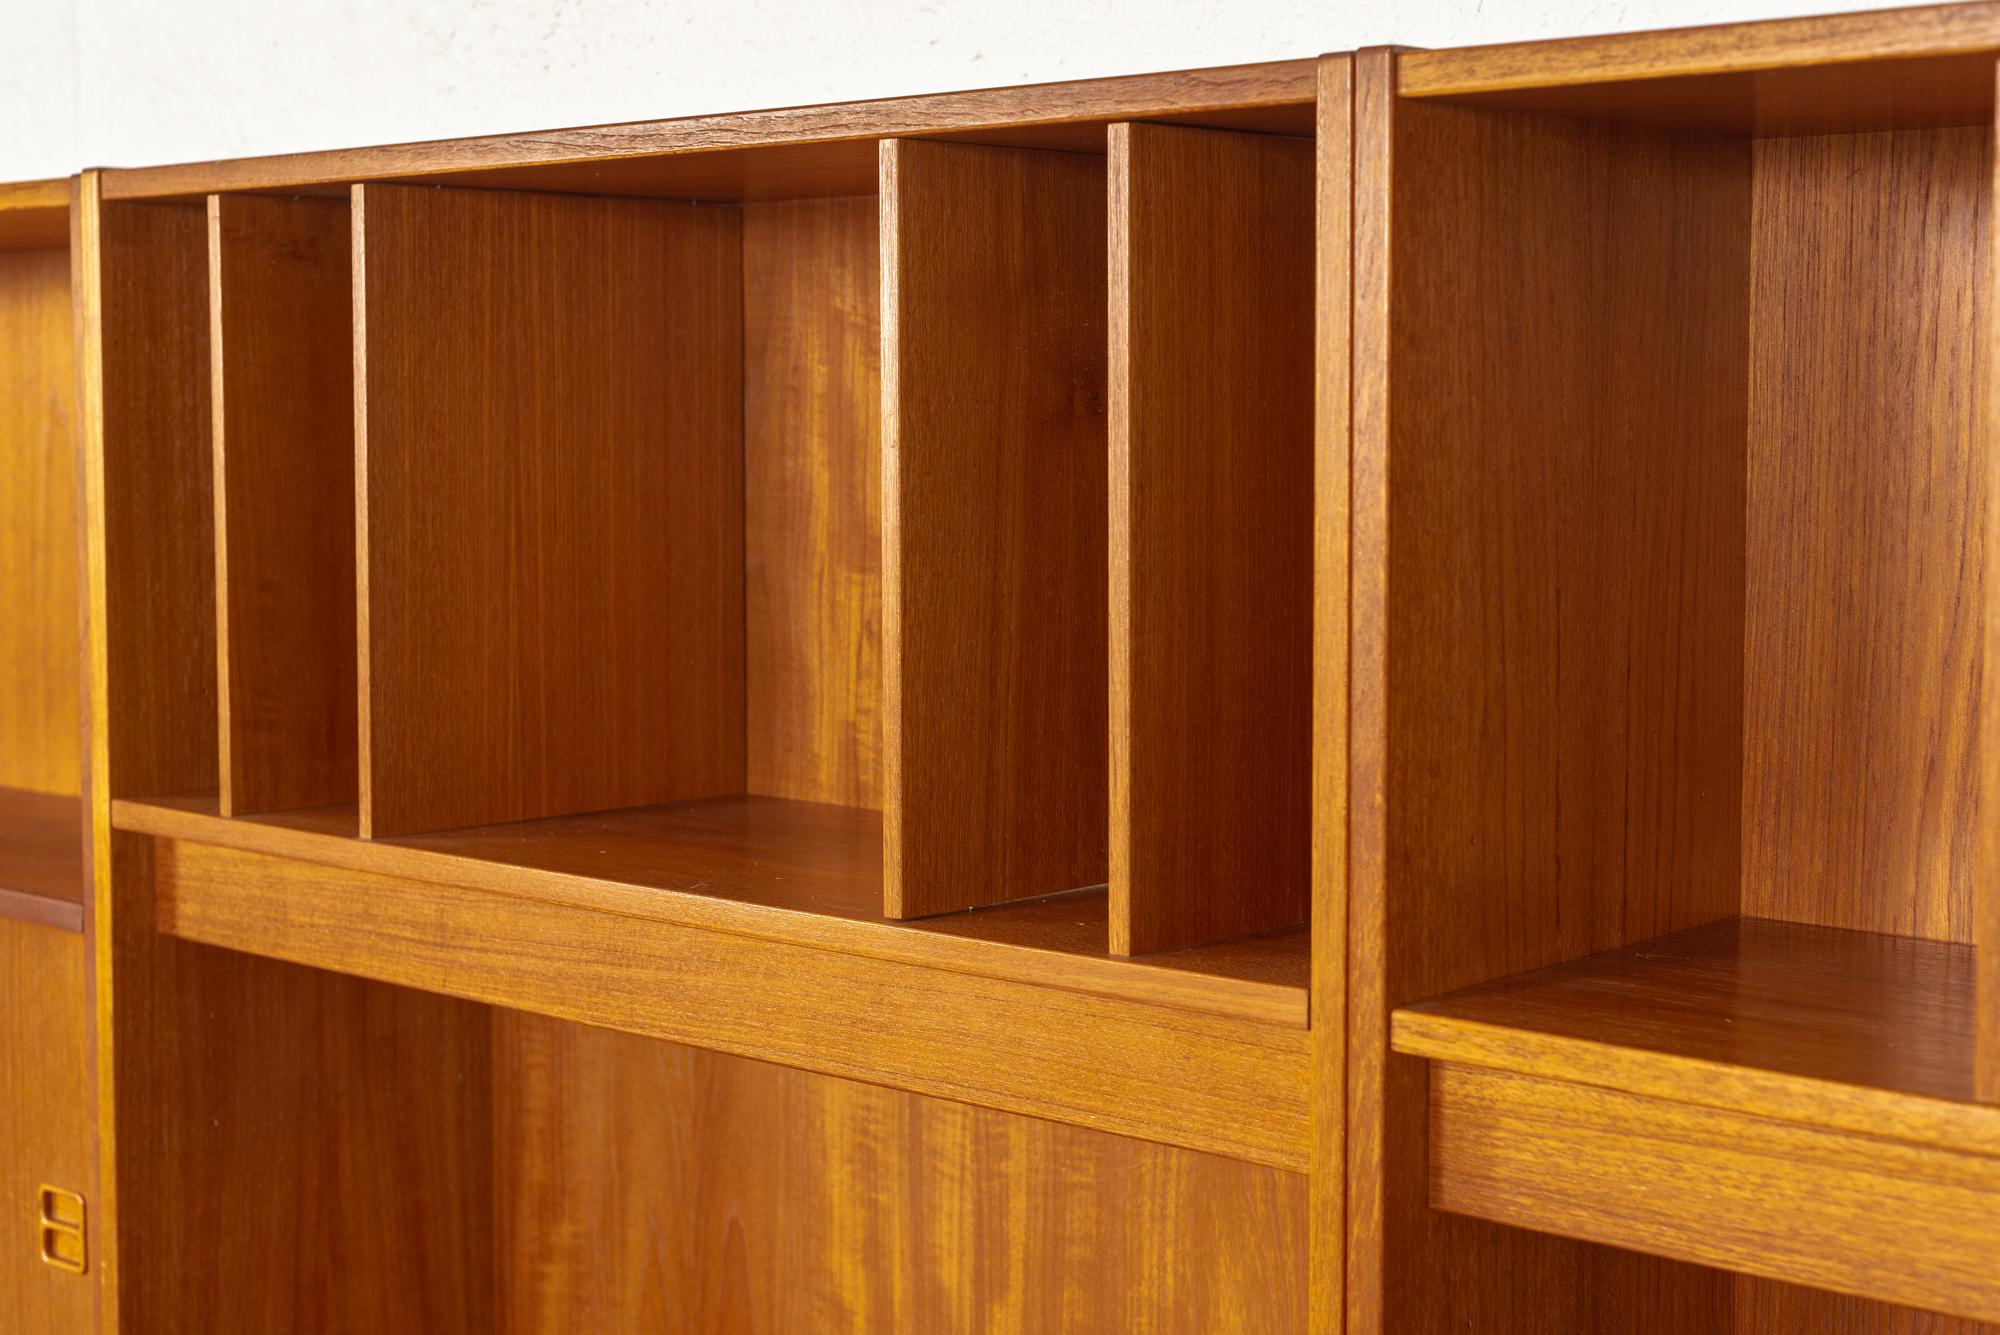 Midcentury Danish Modern Teak Wood Shelving Unit Bookcase Display Cabinet, 1970s 1